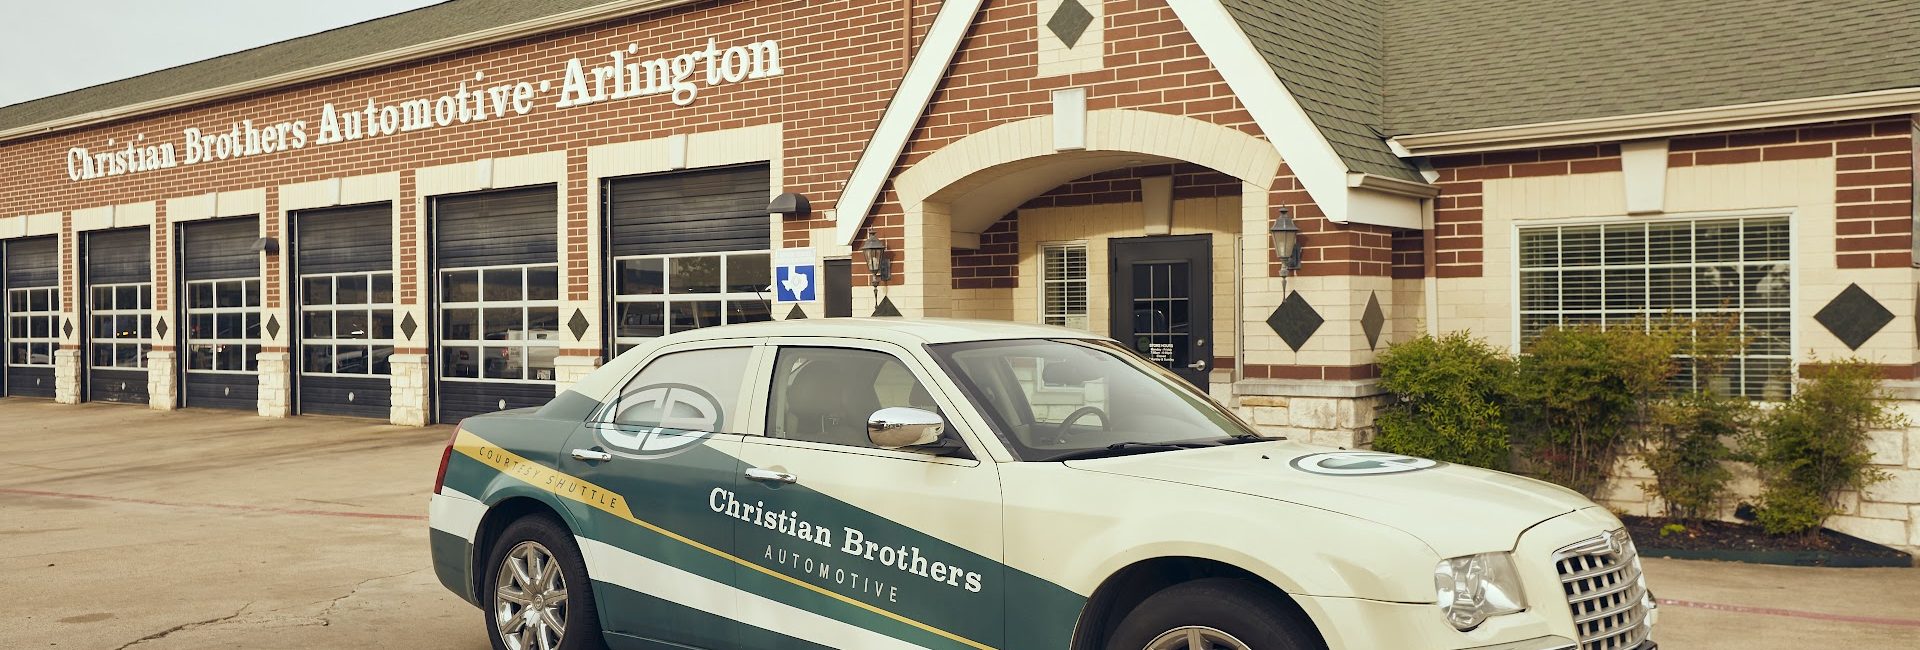 Christian Brothers Automotive Arlington 5